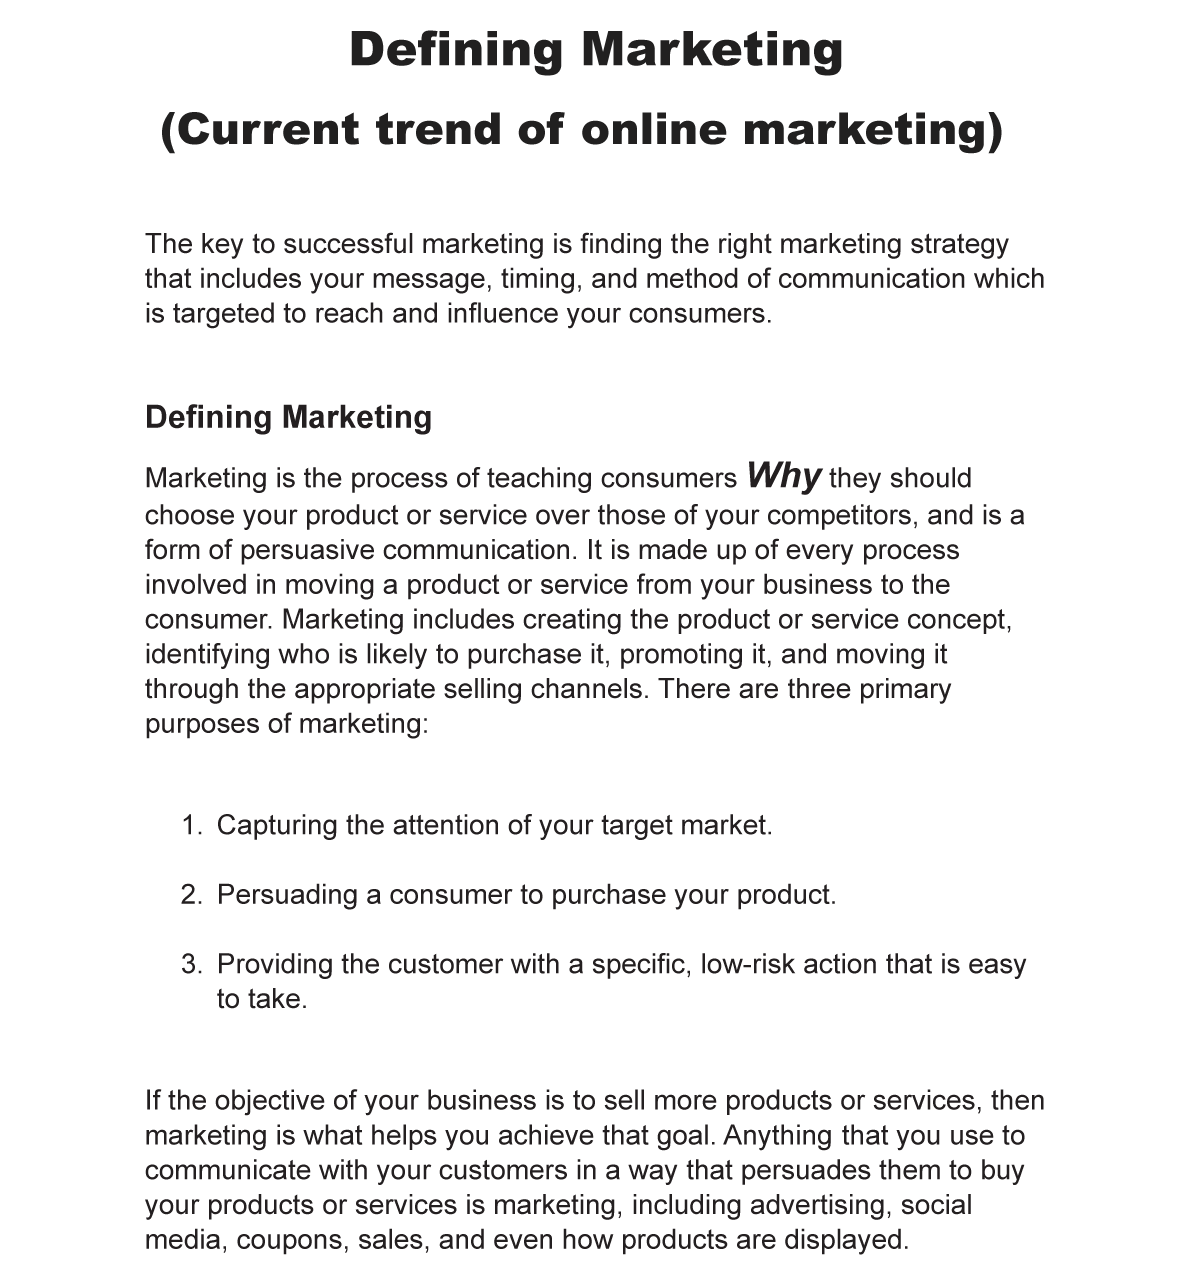 define-marketing-1.png